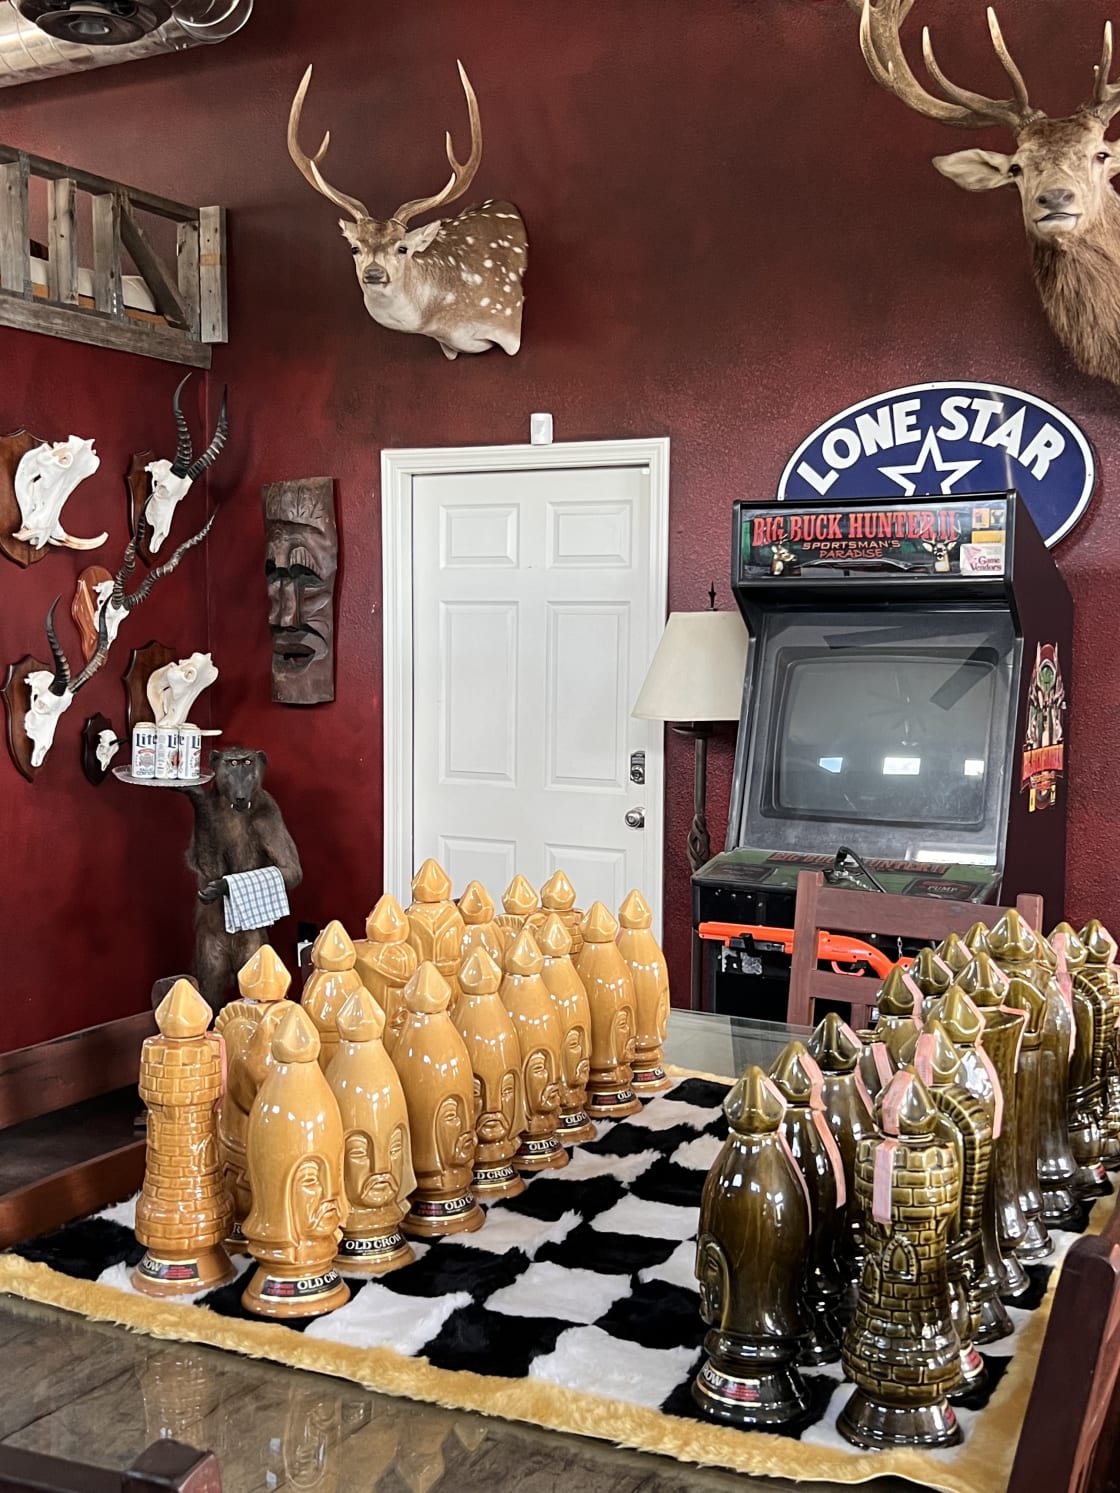 1960s Old Crow Whiskey empty bottle chess set 
Big Buck Hunter working arcade 